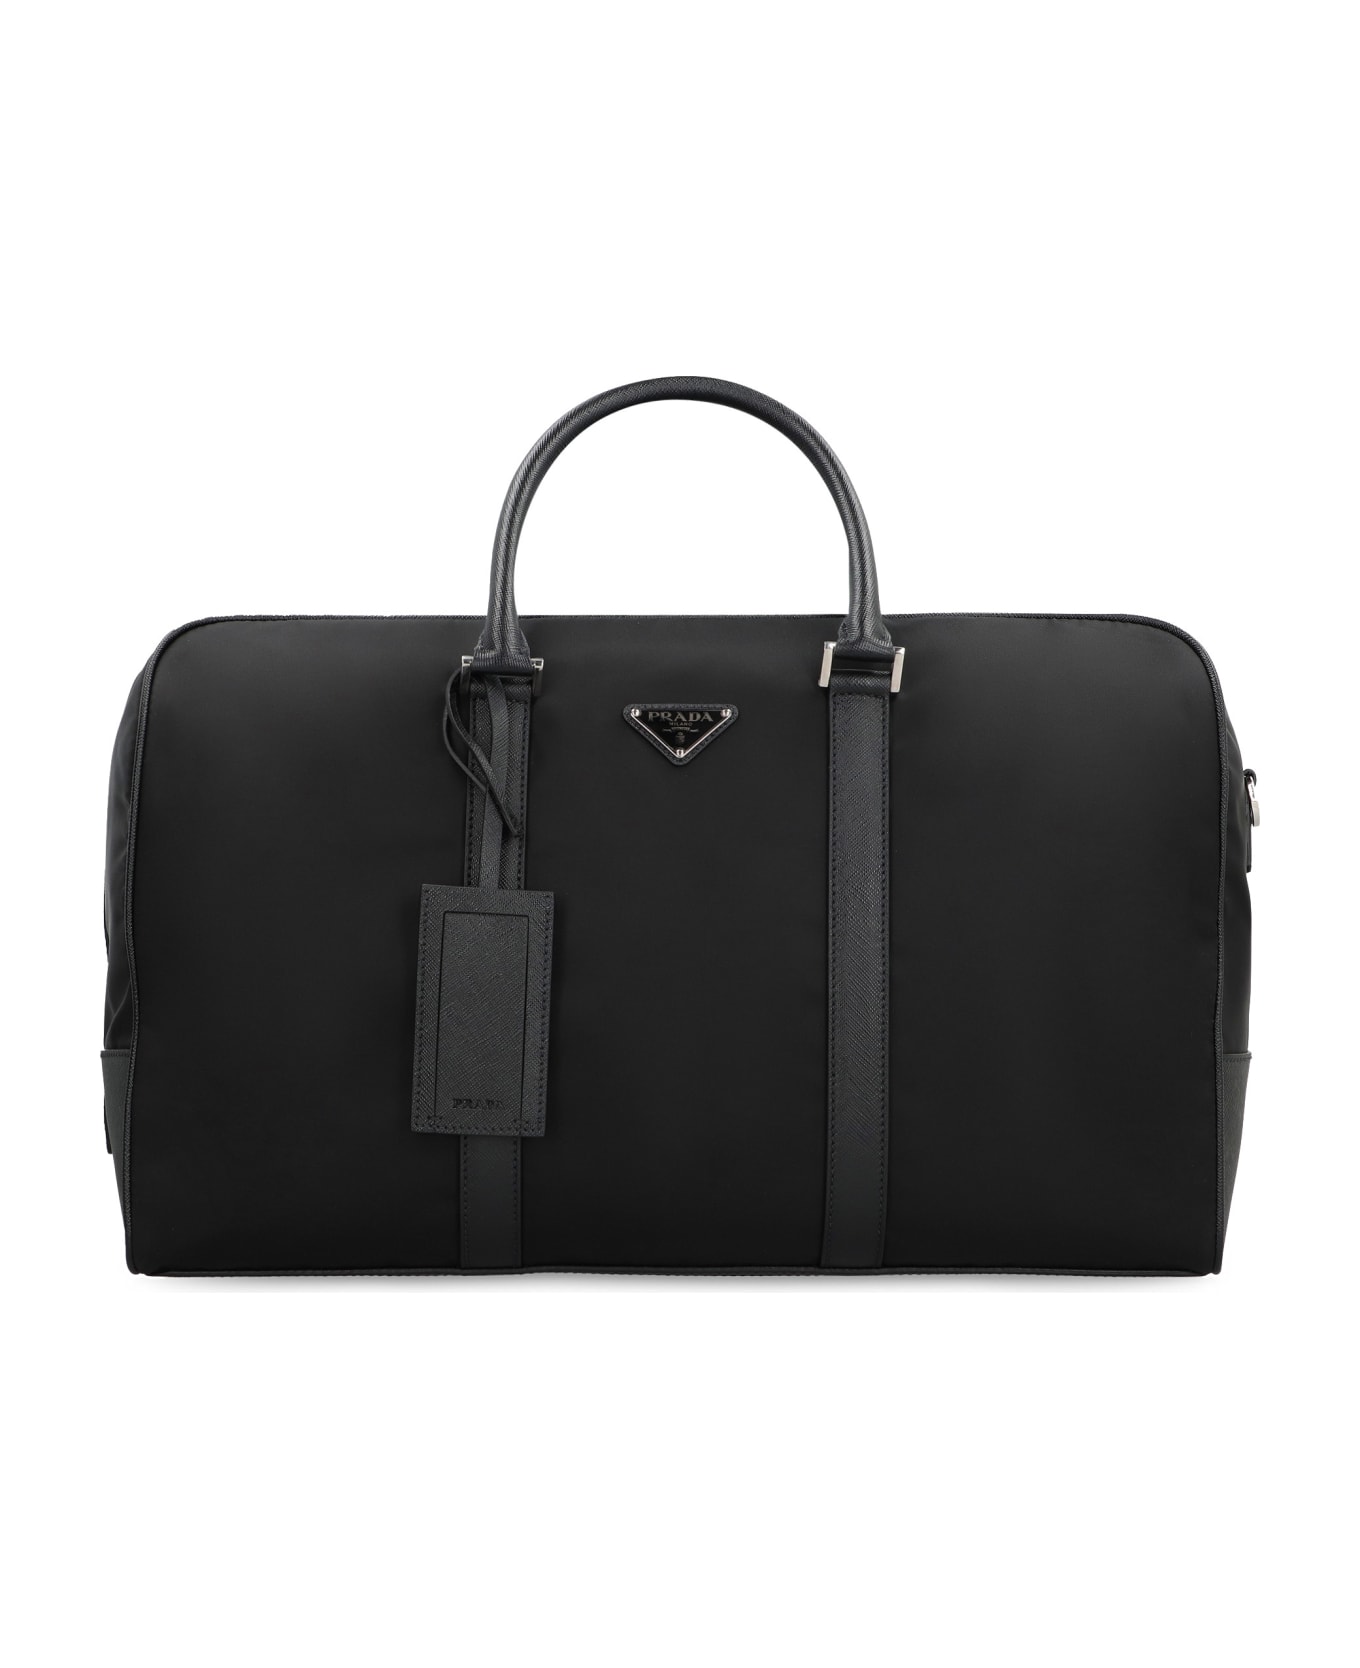 Prada Travel Bag - Black トラベルバッグ